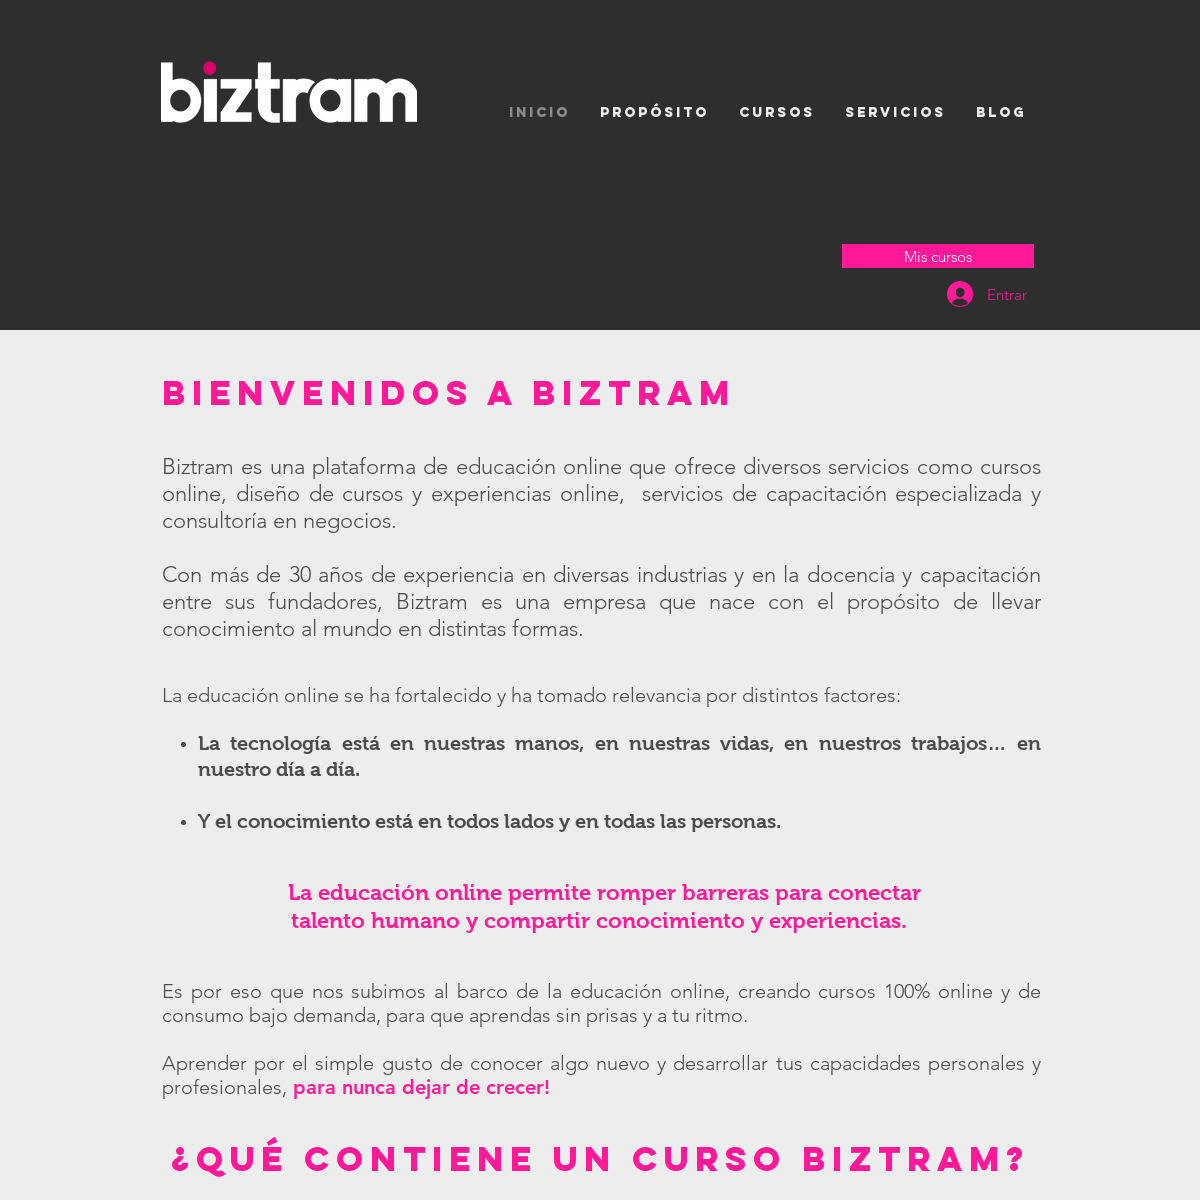 A complete backup of biztram.com